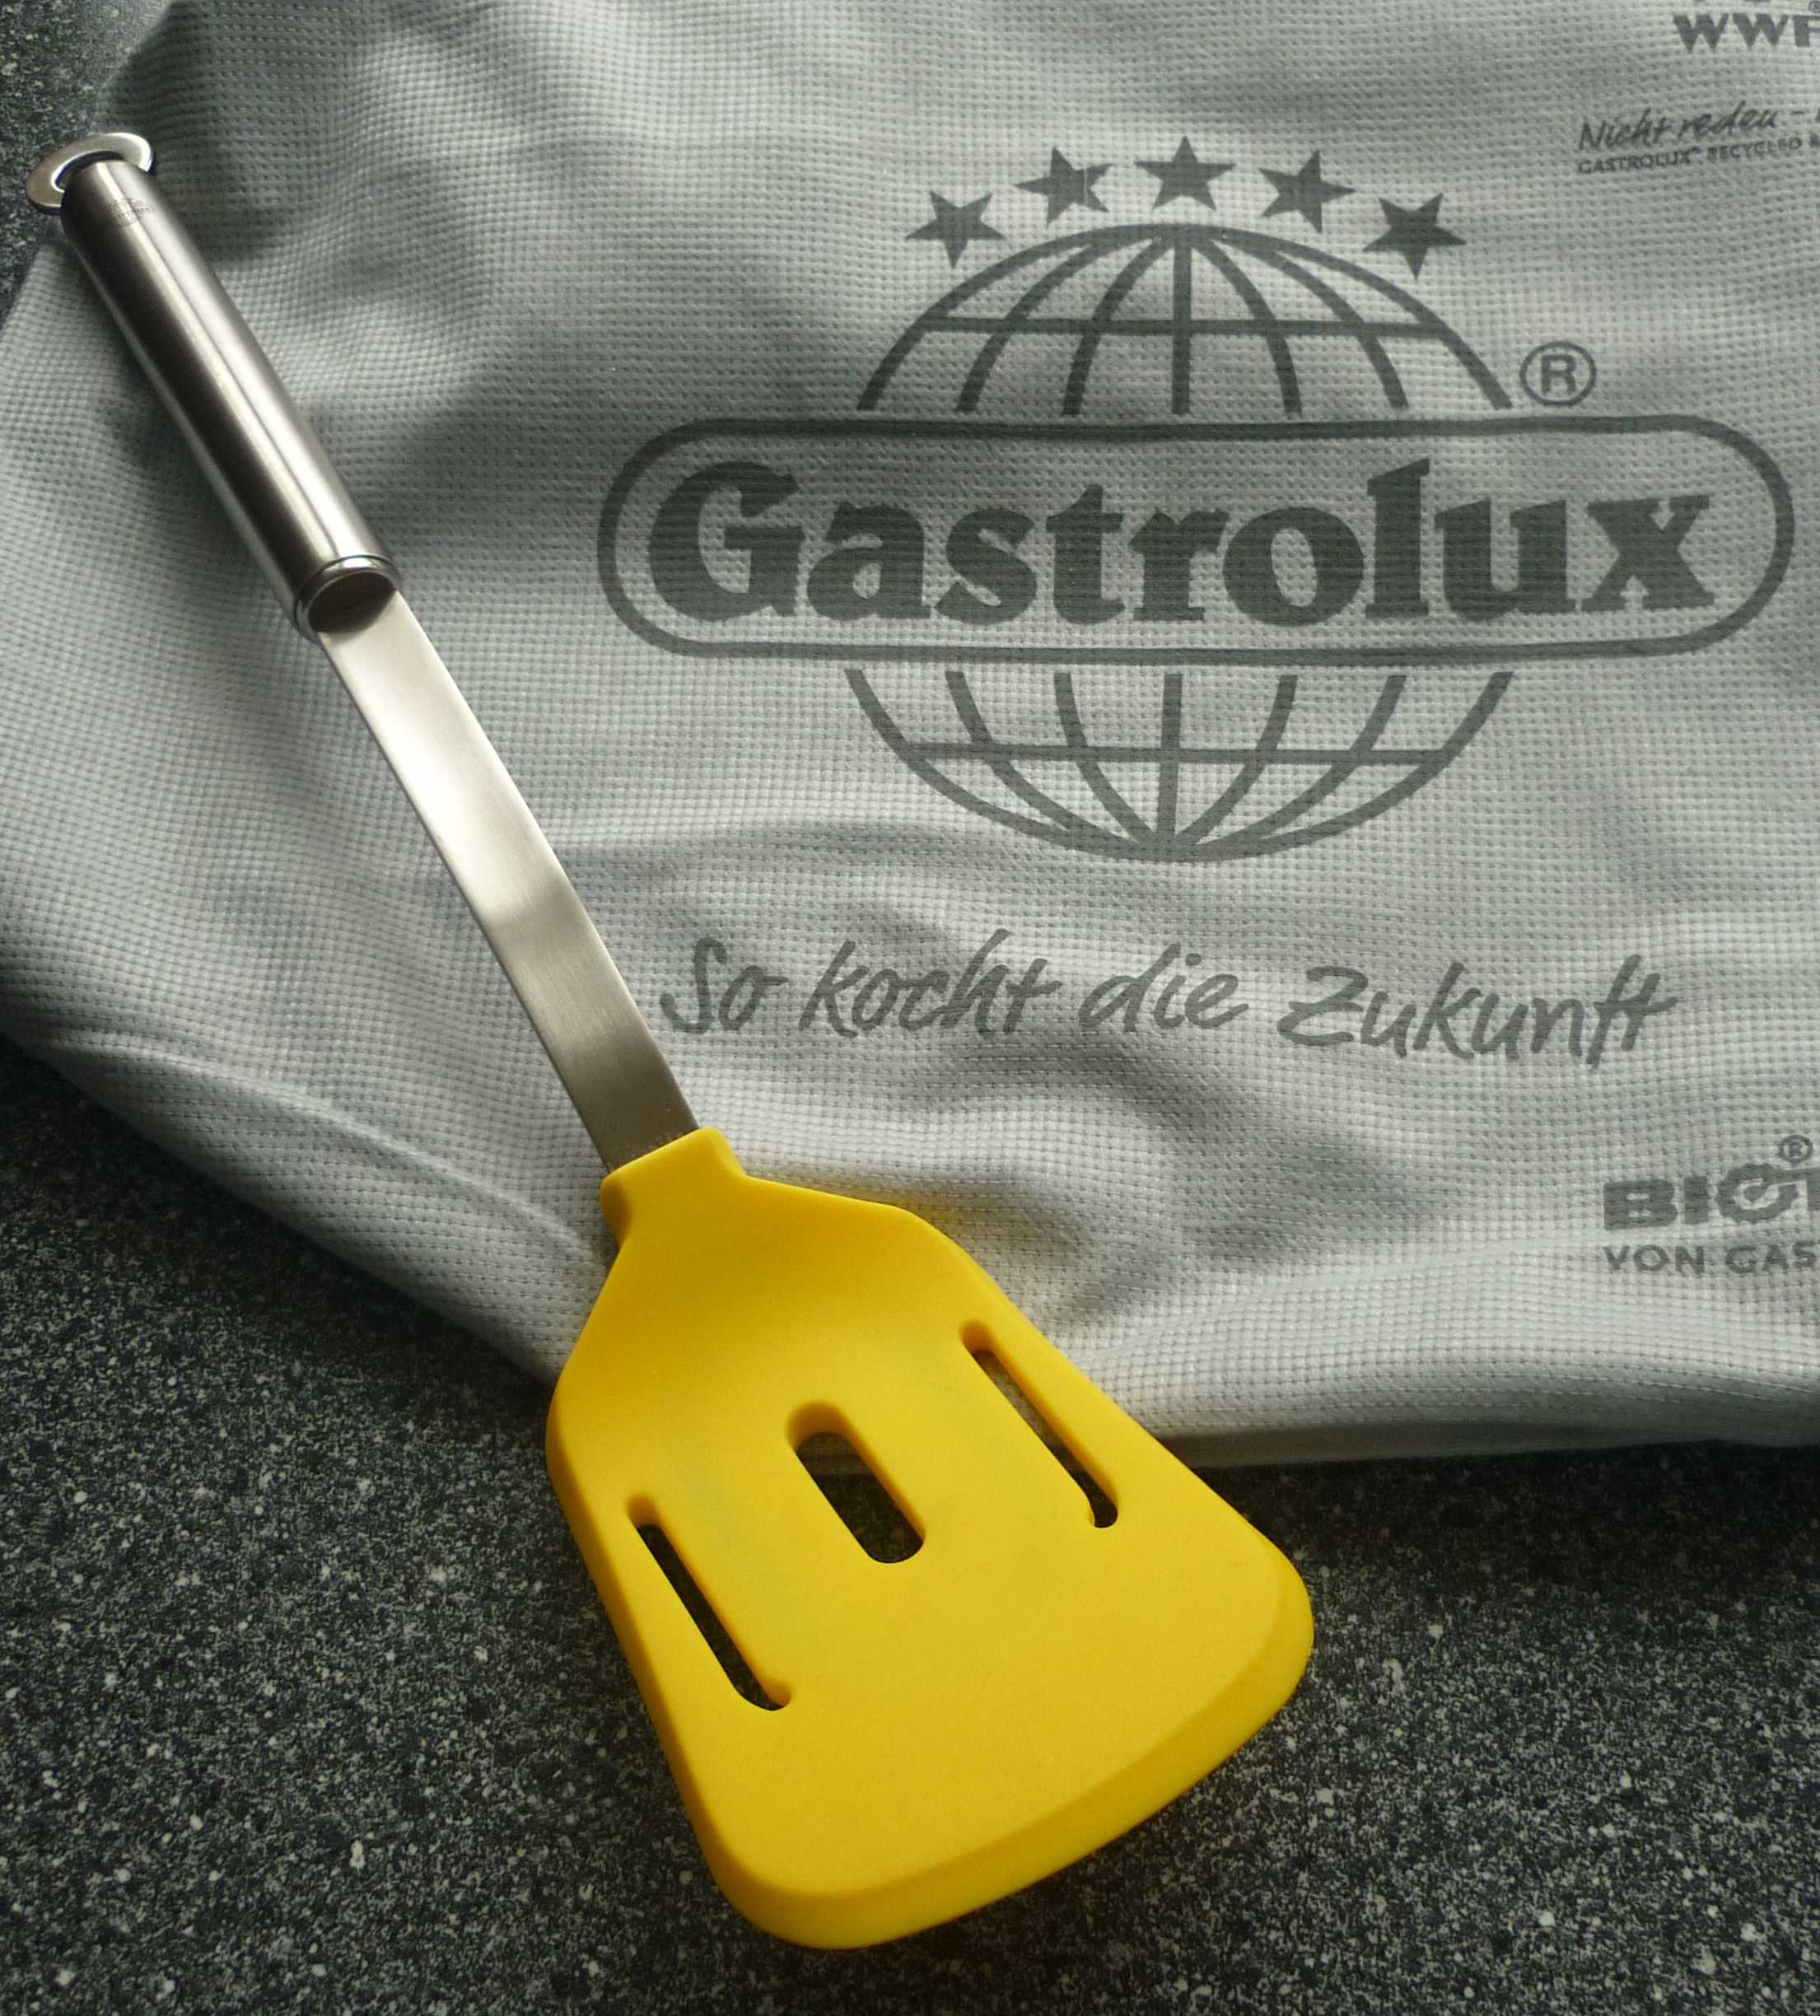 Gastrolux03